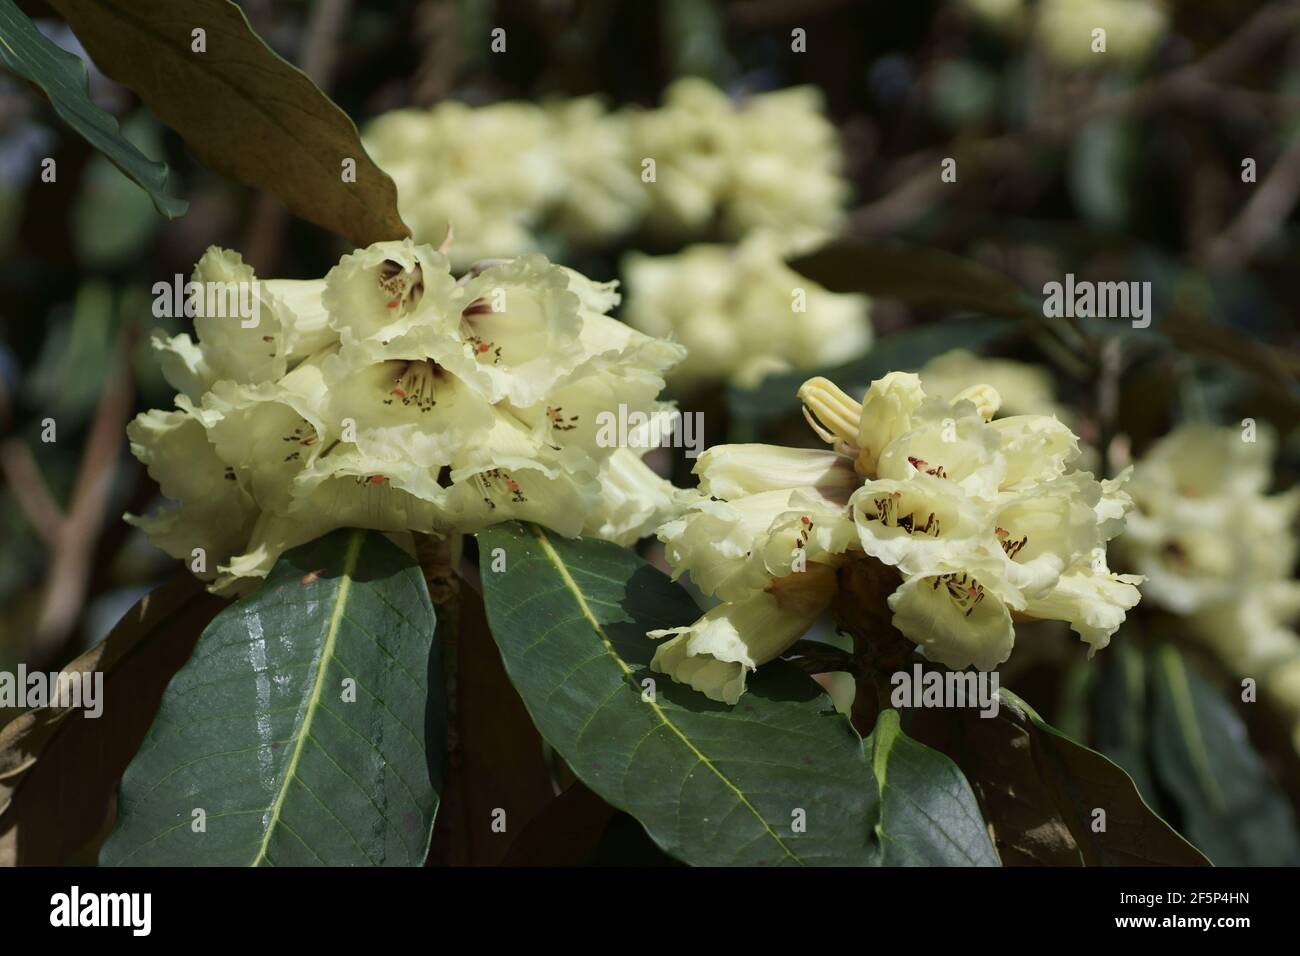 Rhododendron macabeanum at Clyne gardens Stock Photo